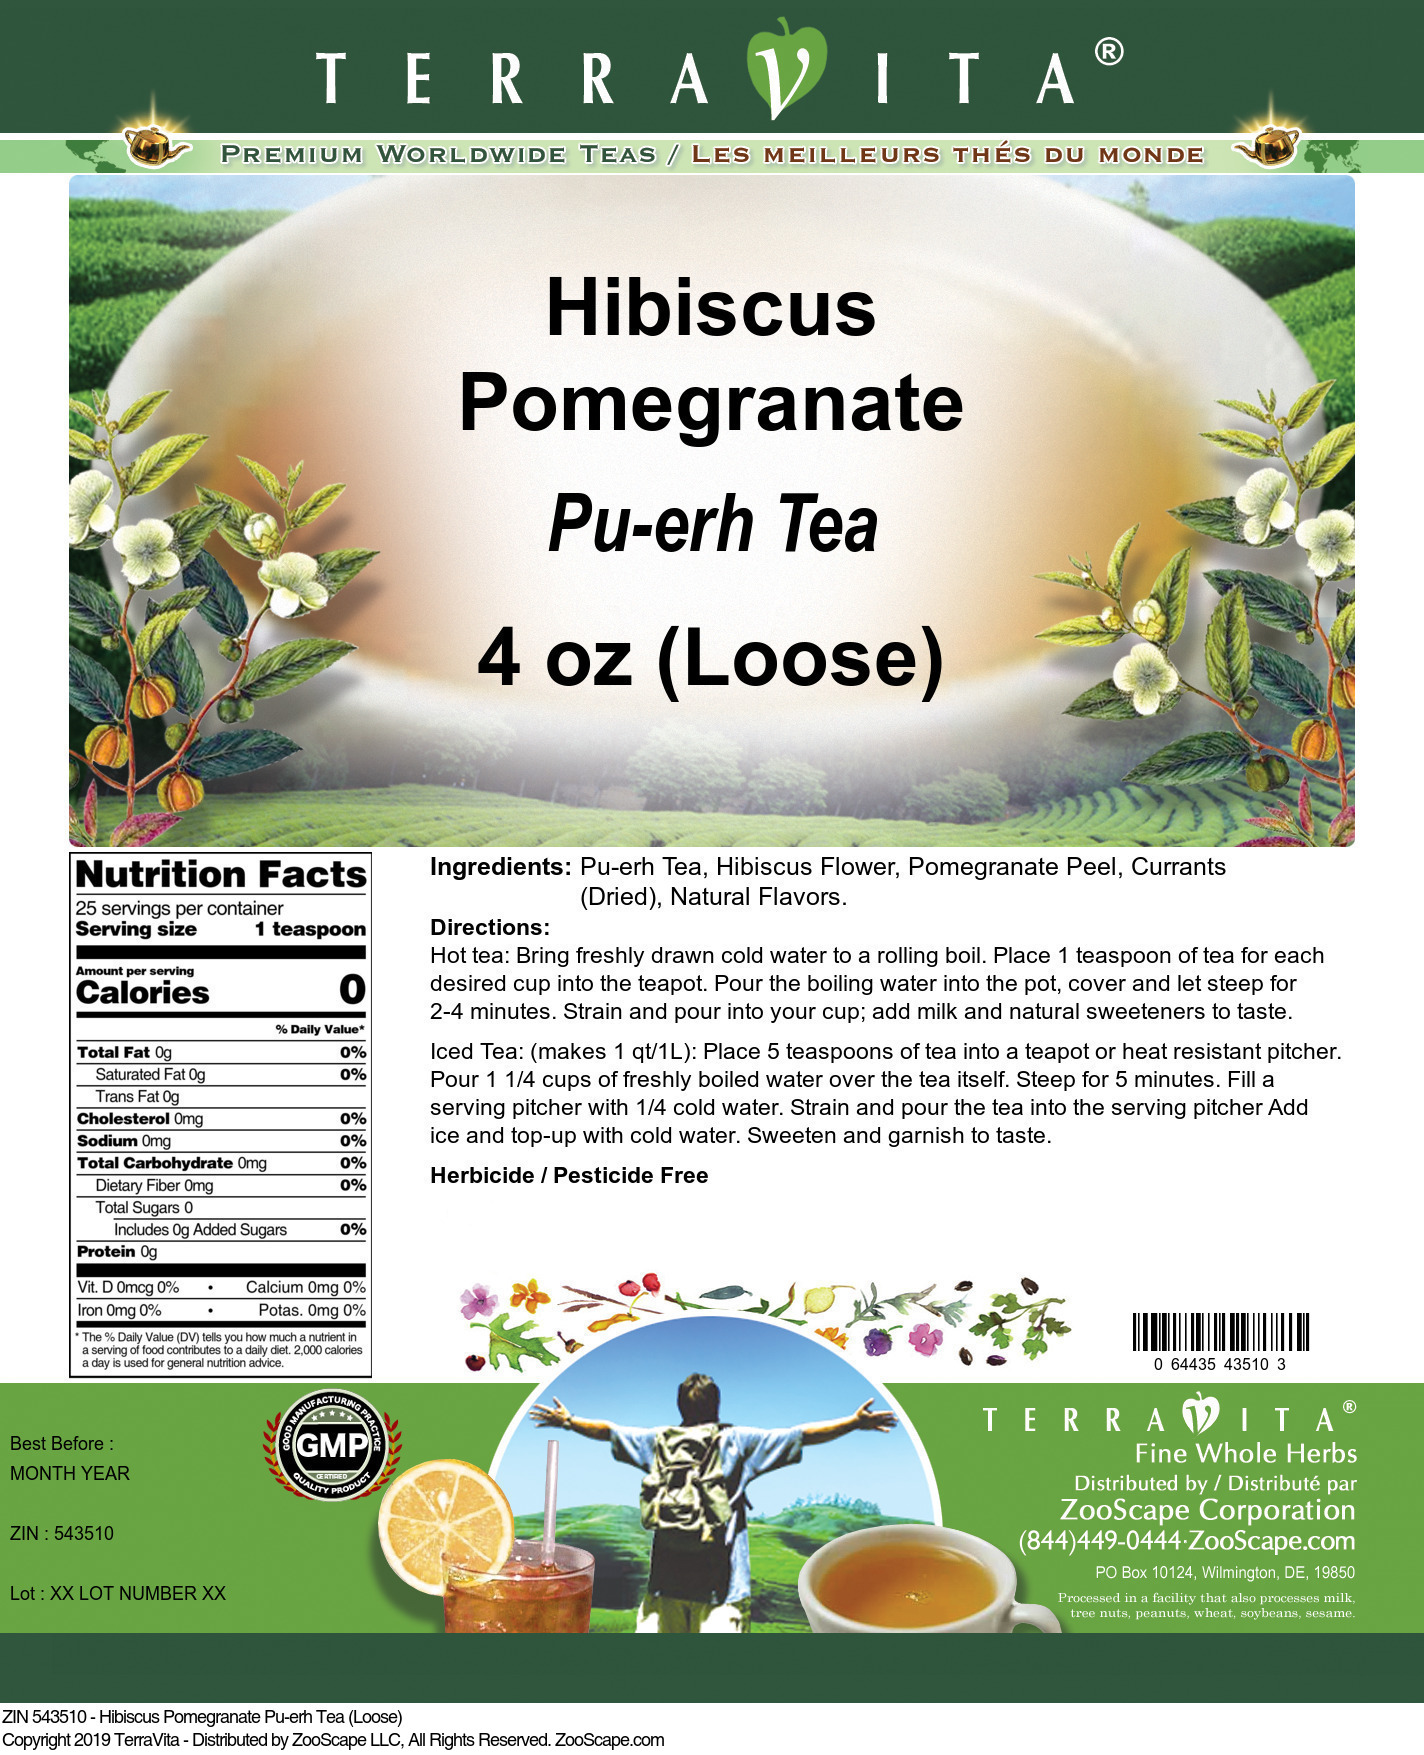 Hibiscus Pomegranate Pu-erh Tea (Loose) - Label